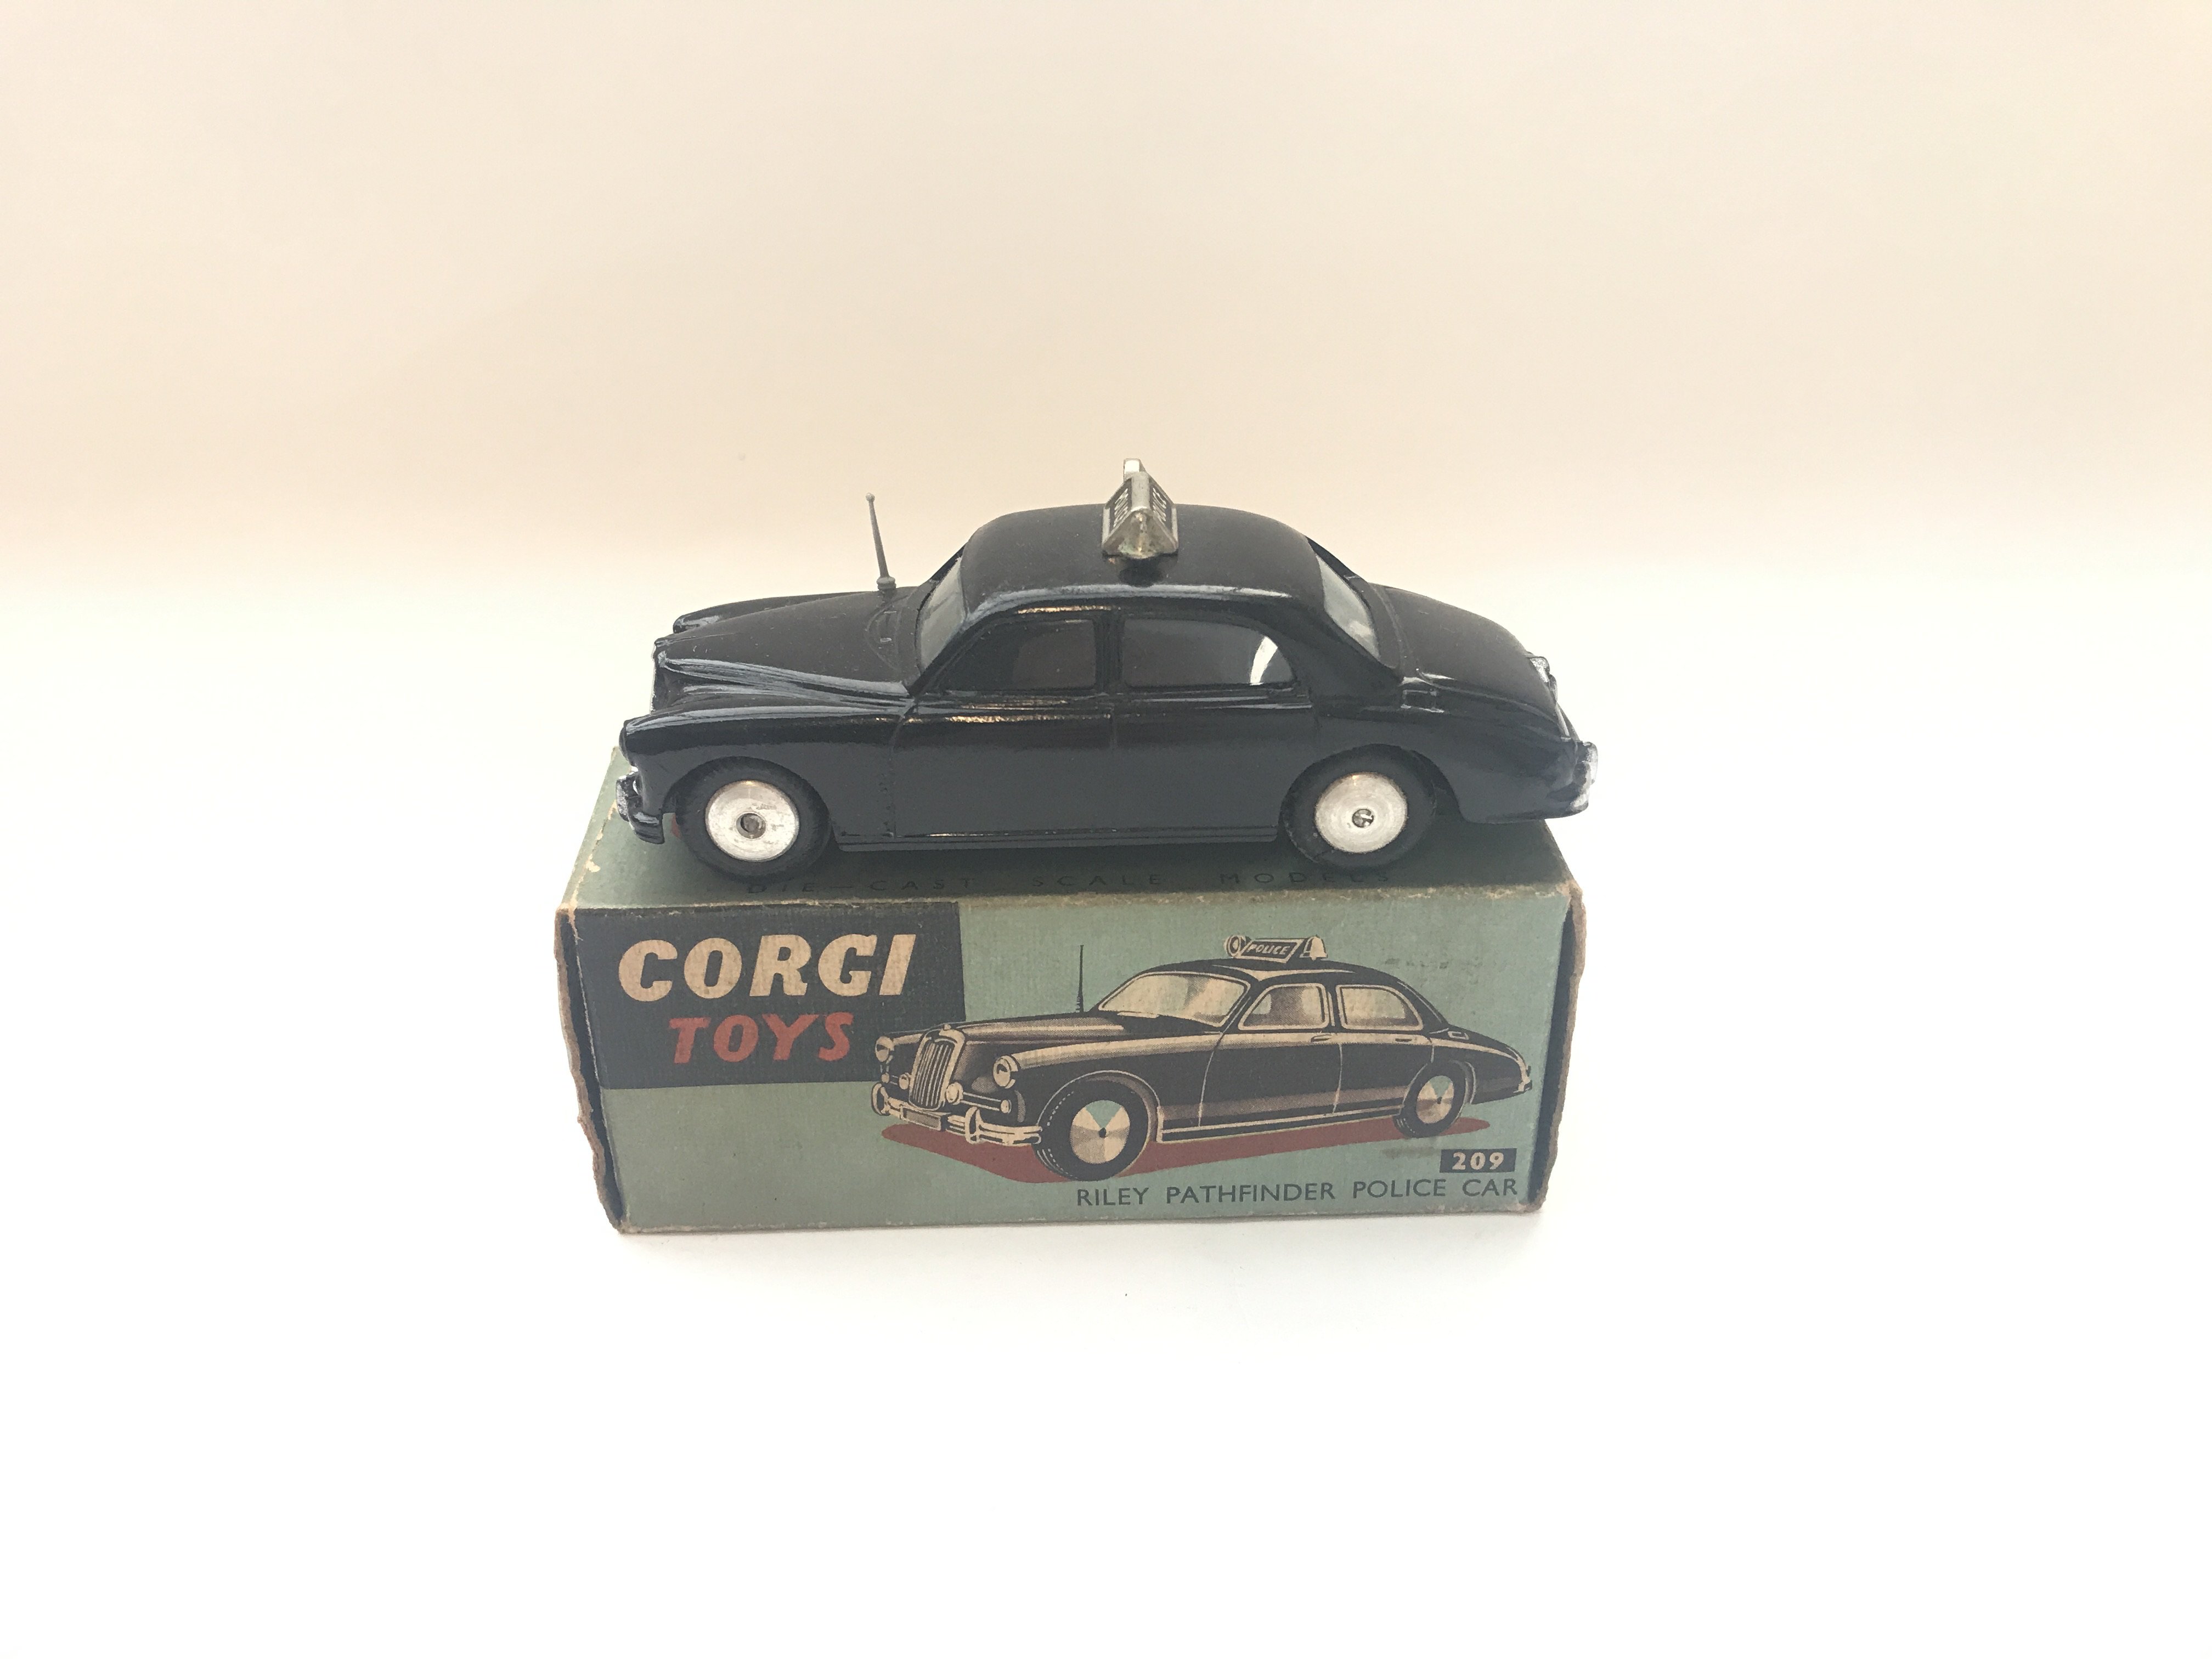 A Corgi Riley Pathfinder Police Car boxed. #209 - Image 3 of 3